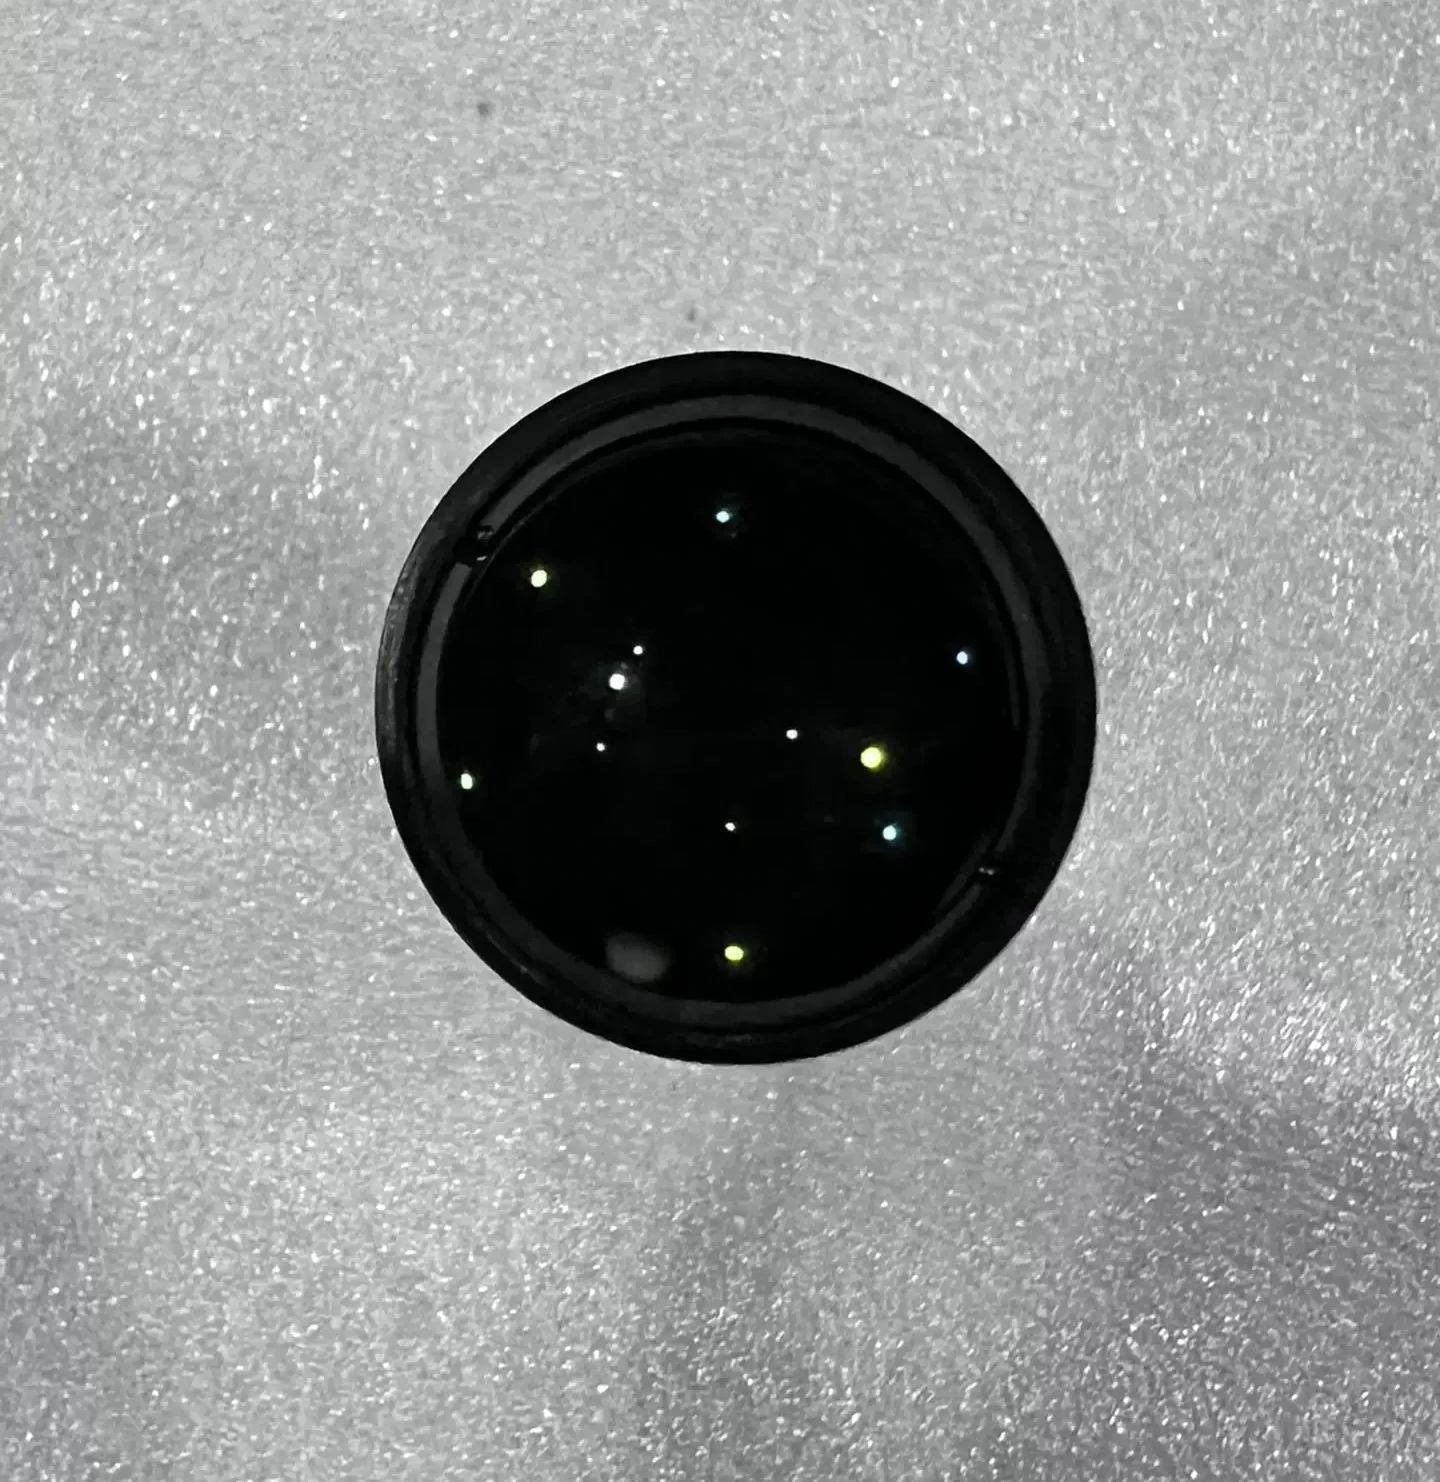 DH05-130A telecentric objektyvas mašina matymo objektyvo geros būklės, išbandyta, GERAI.